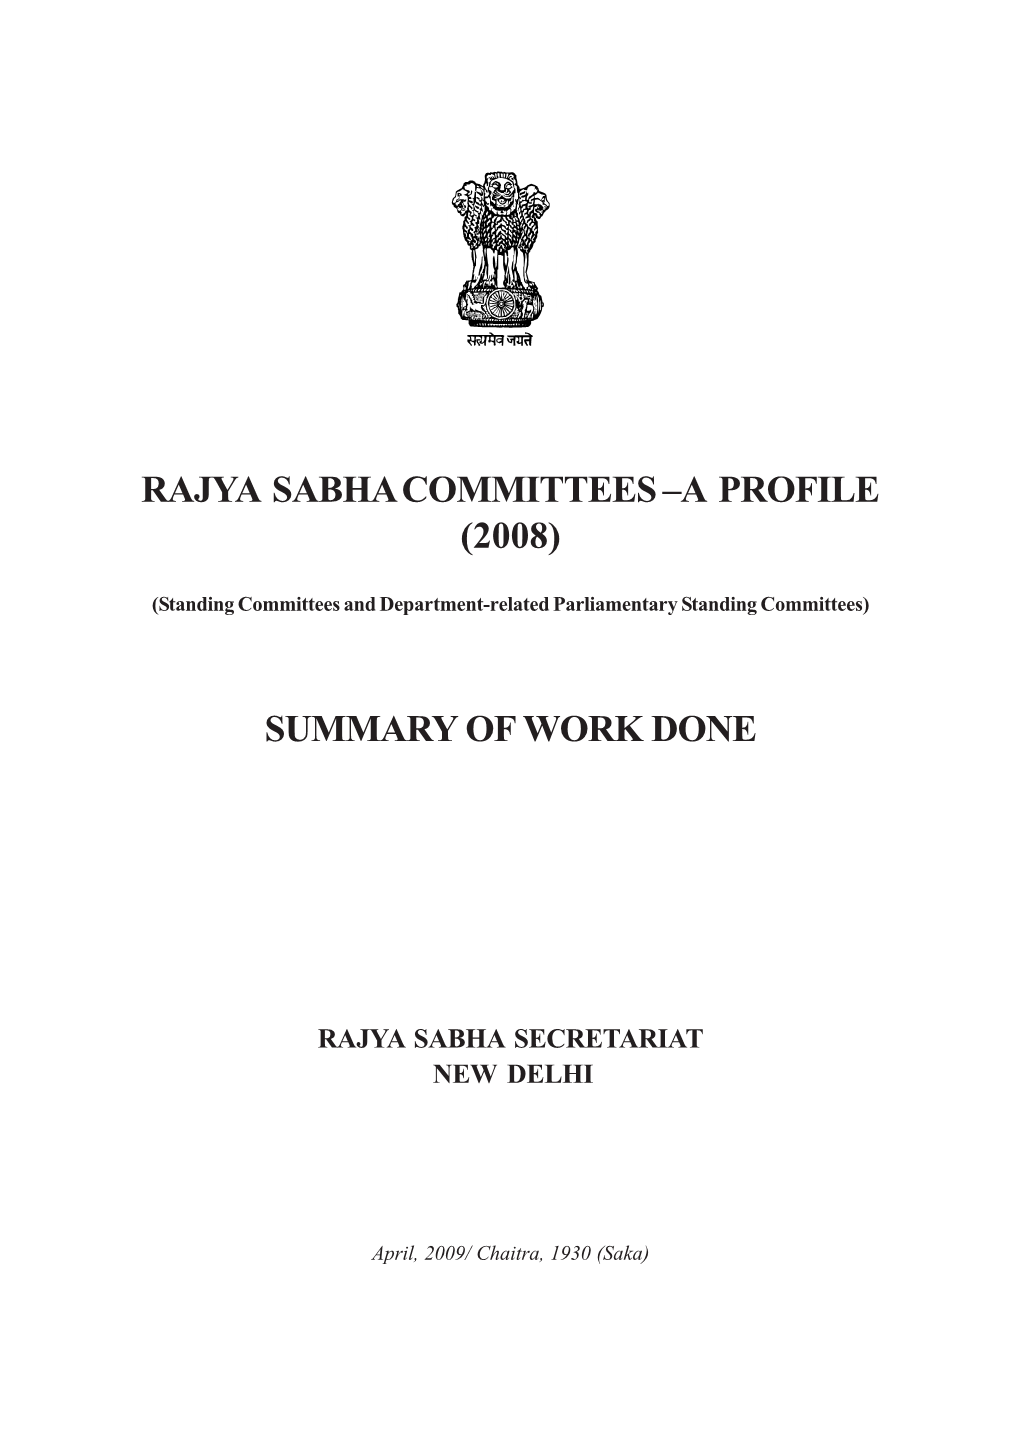 Rajya Sabha Committees –A Profile (2008)